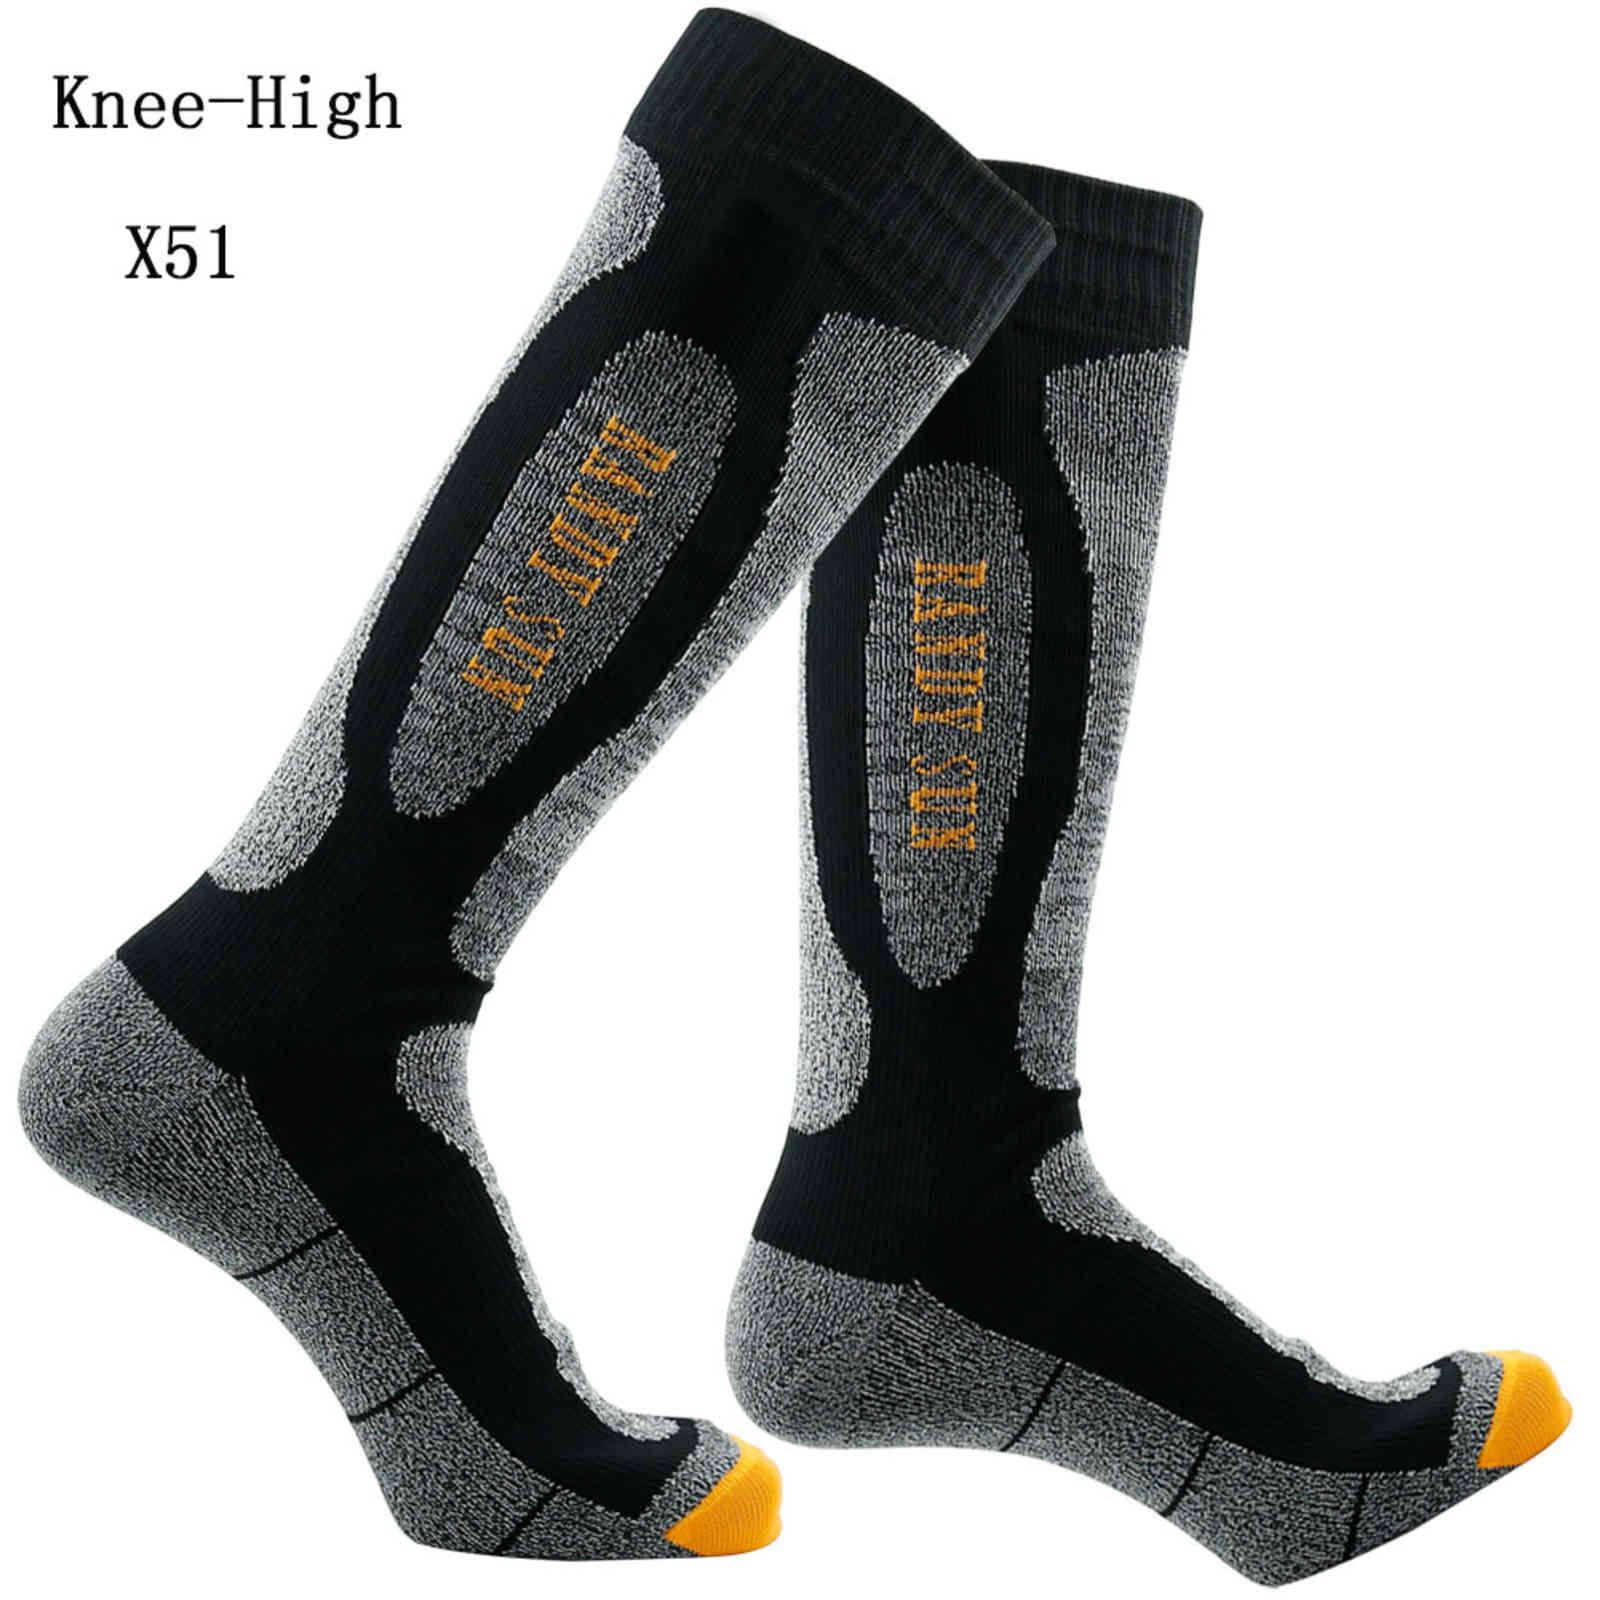 Knee High X51.